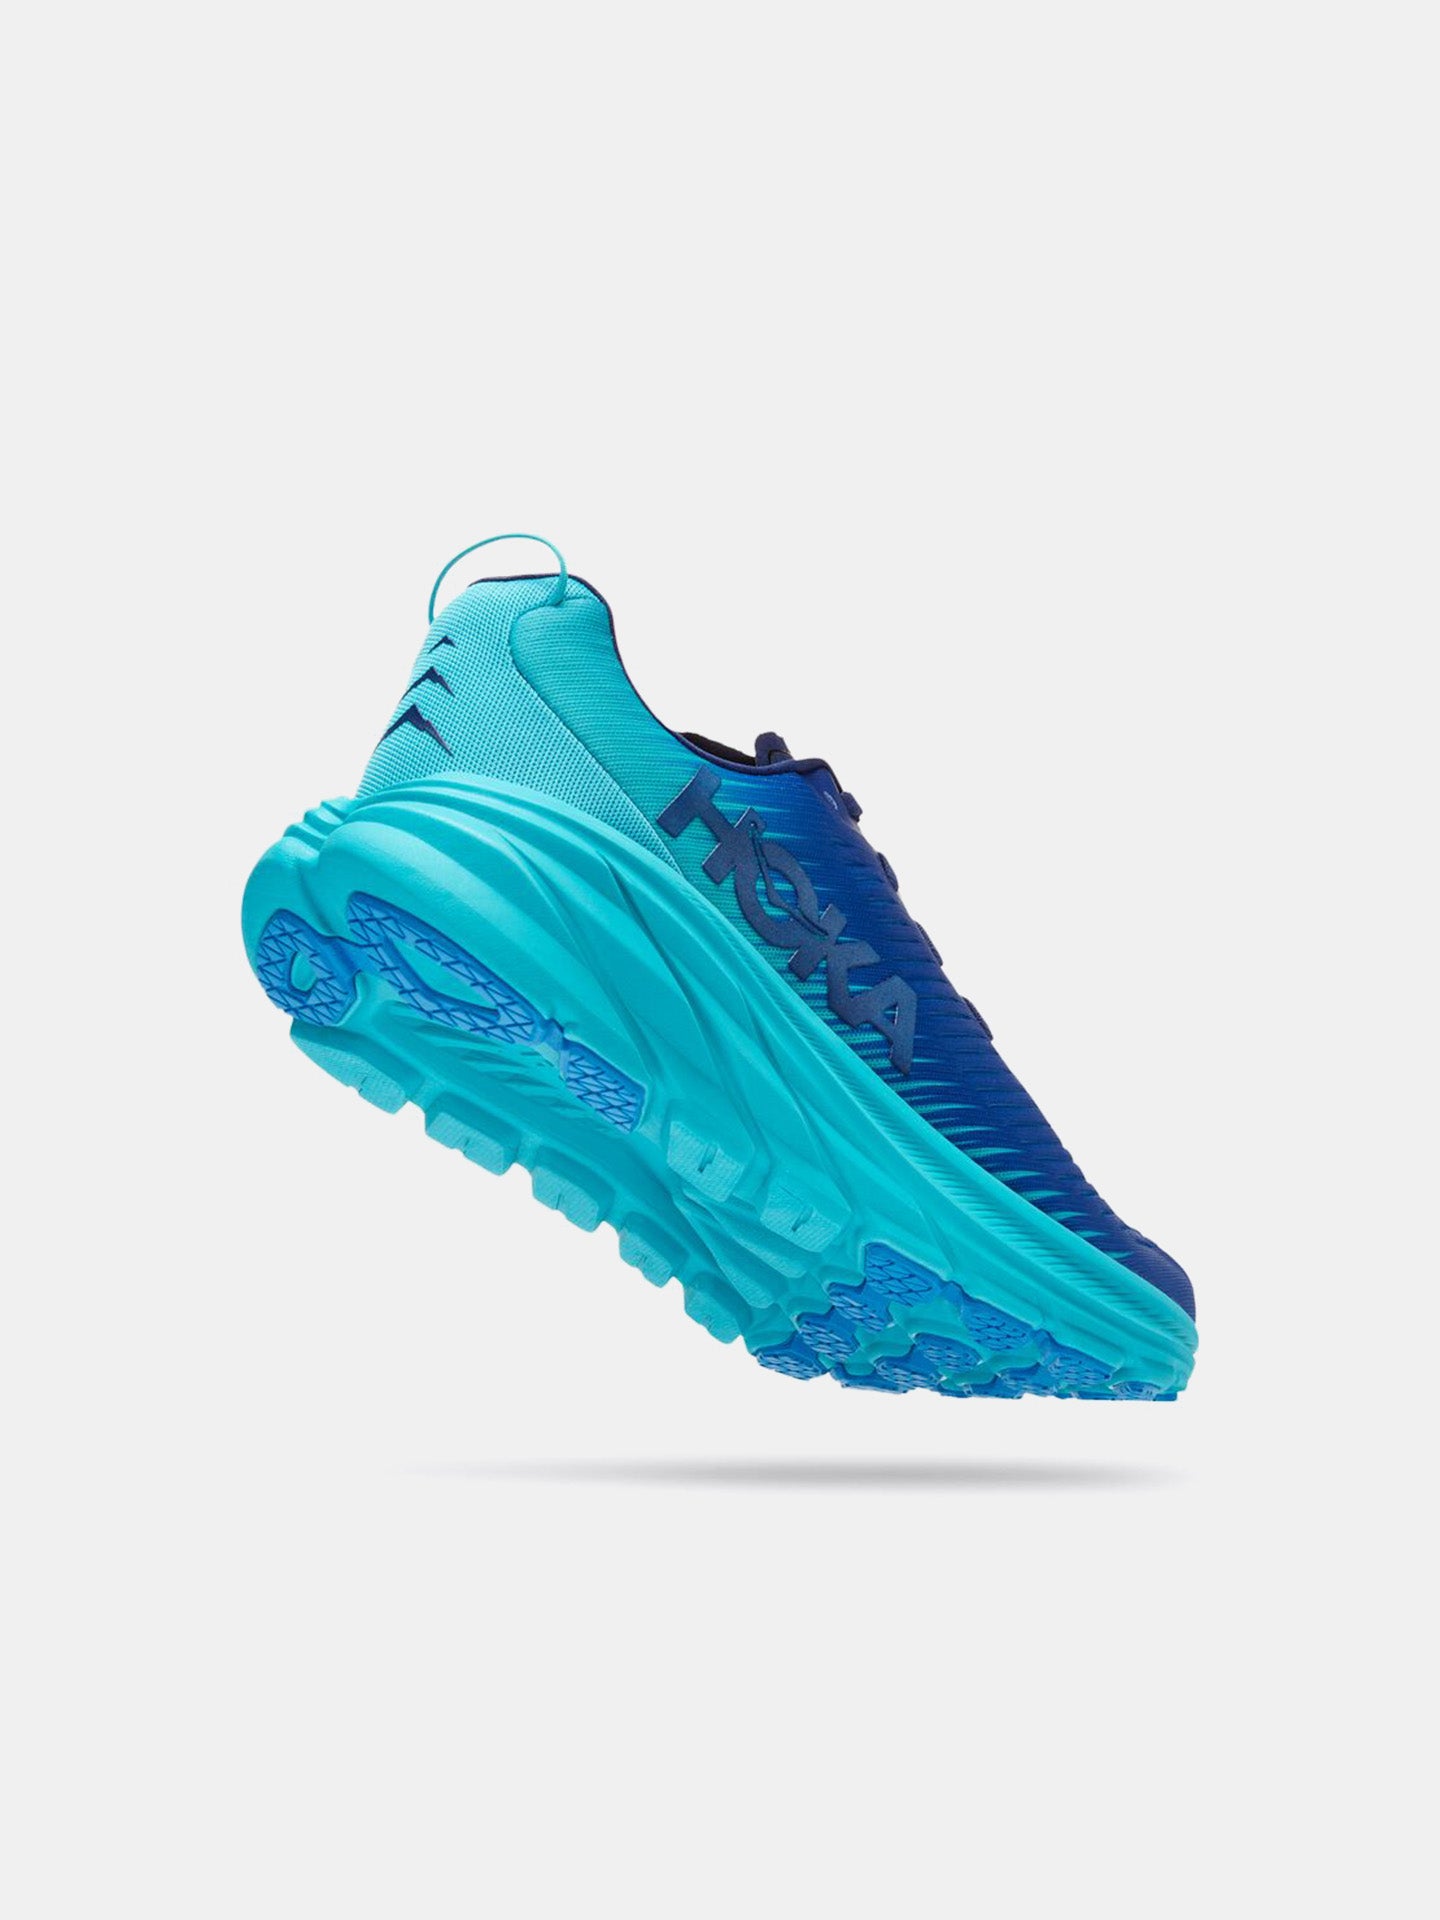 Hoka Men's Rincon 3 Lightweight Running Shoe #color_Blue